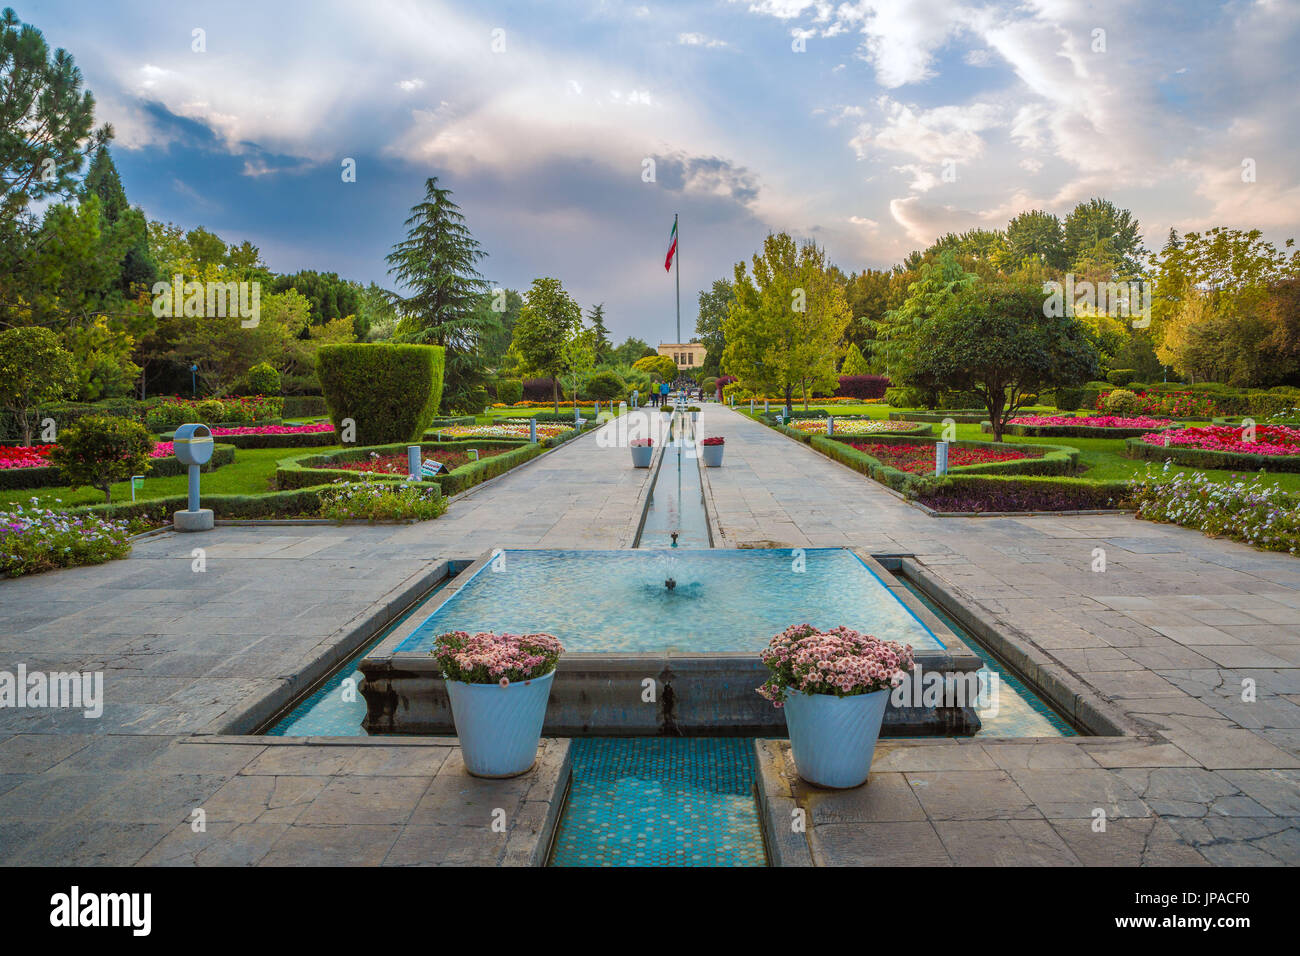 Iran, Esfahan City, Flowers Garden Stock Photo